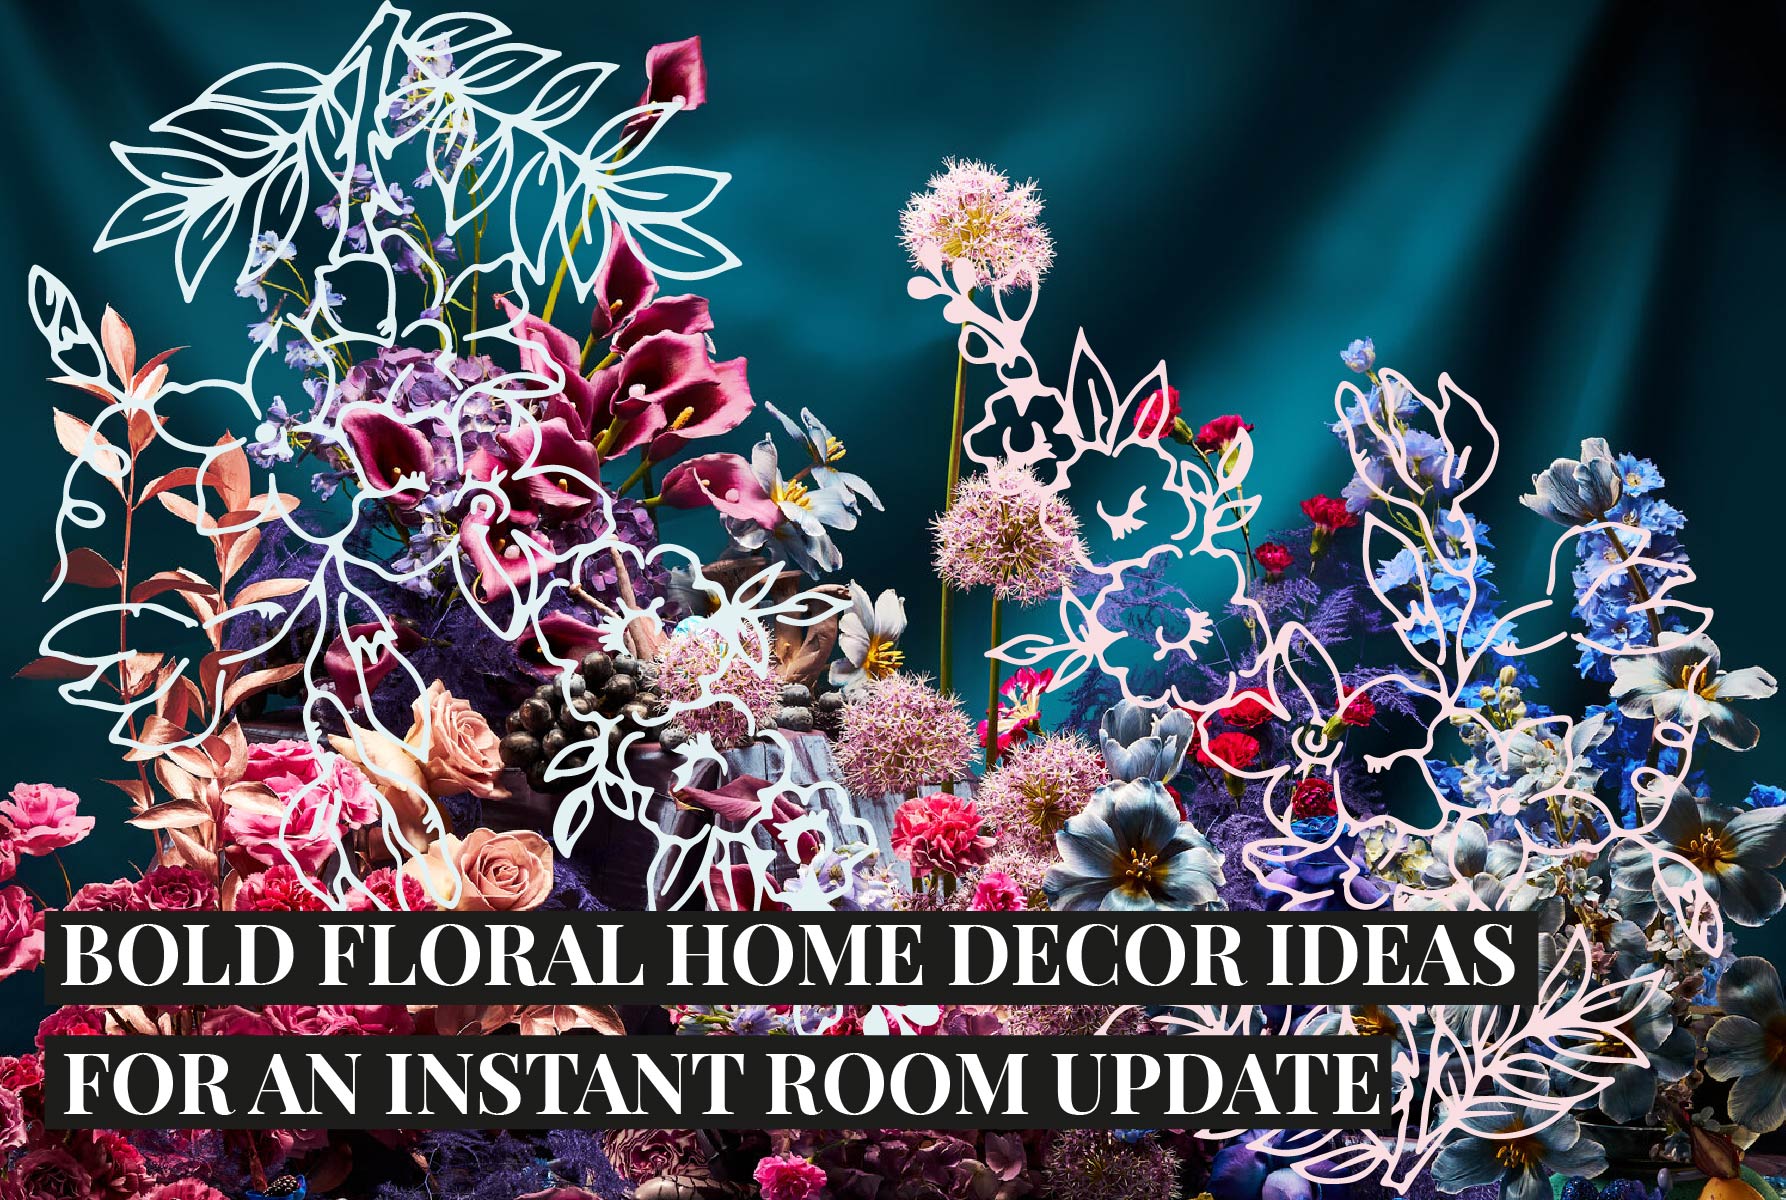 Bold floral home decor ideas